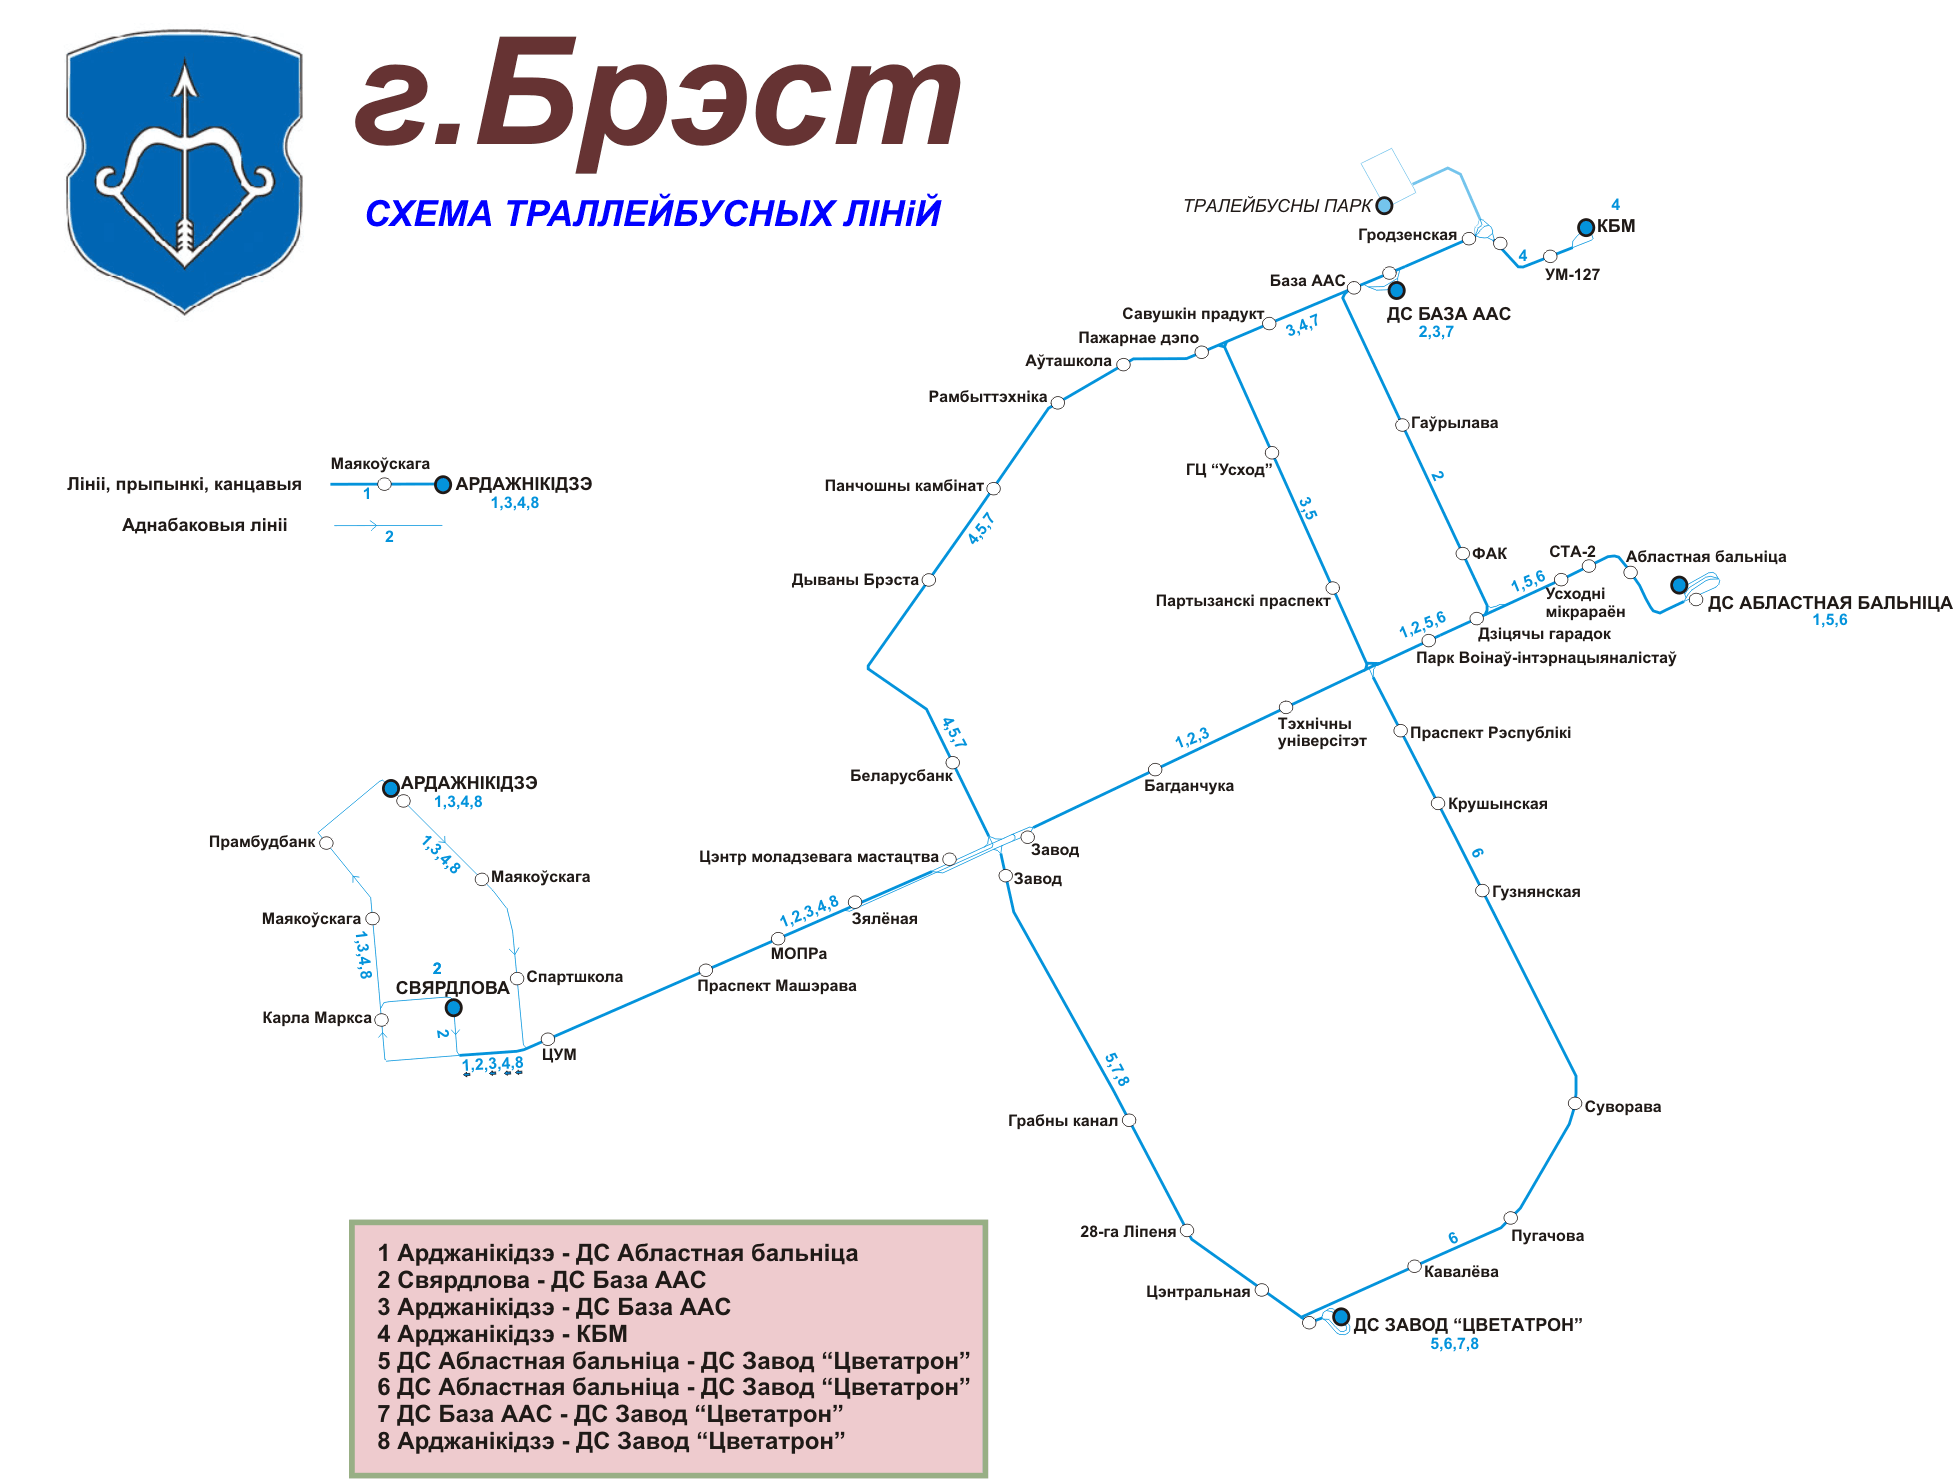 Brest — Maps